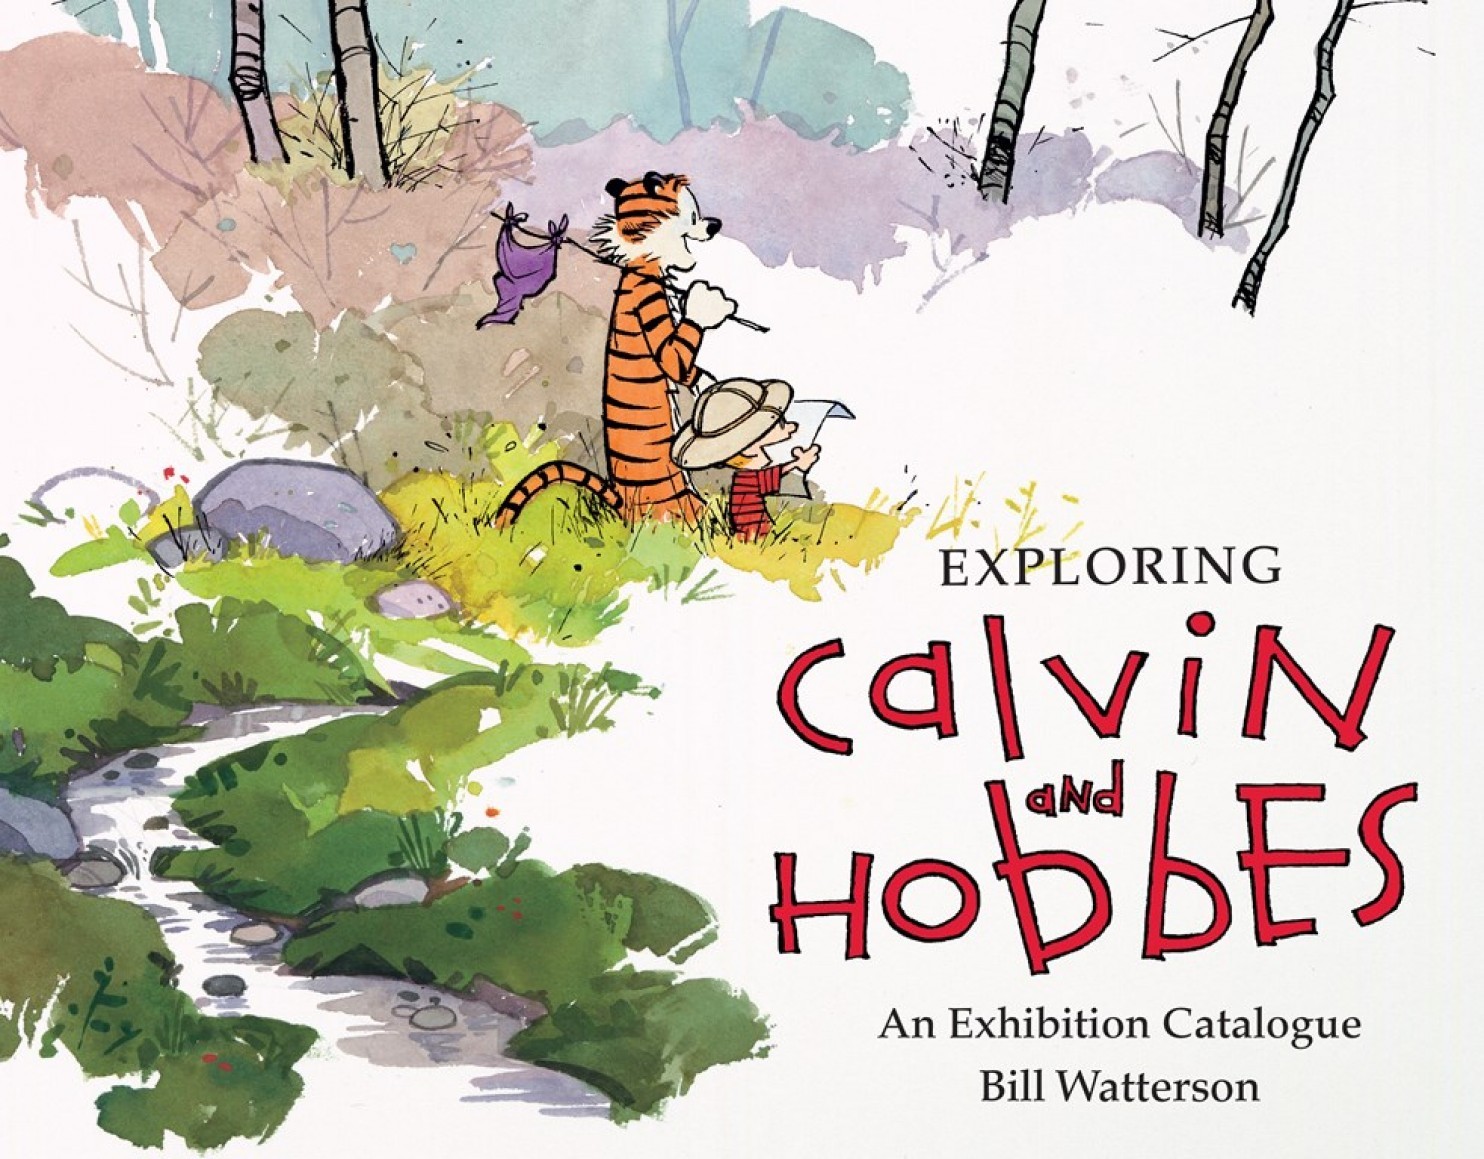 “Exploring Calvin & Hobbes”